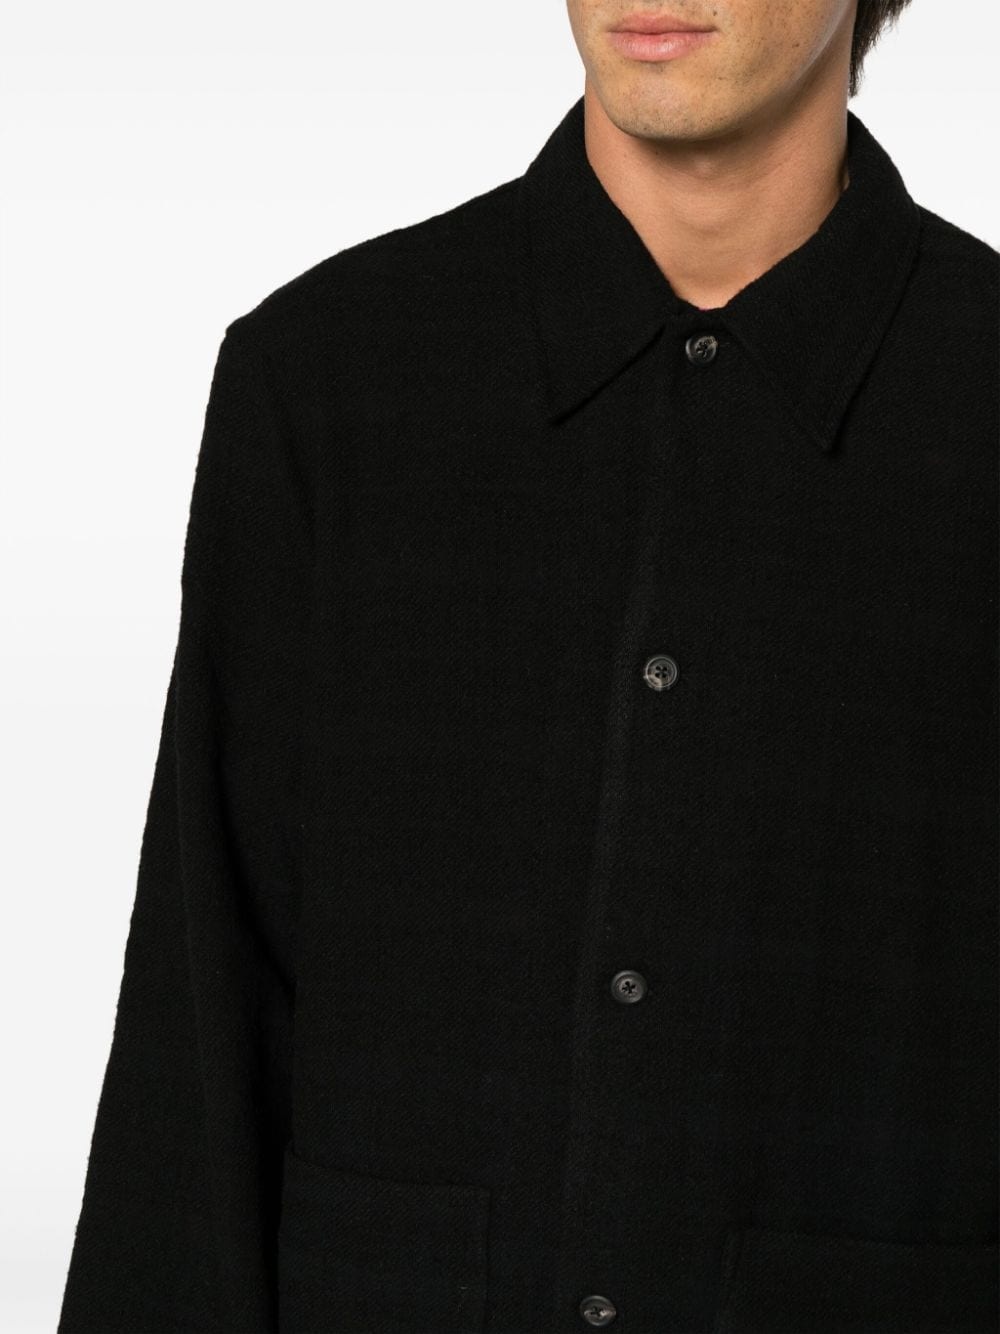 Maven felted shirt jacket - 5